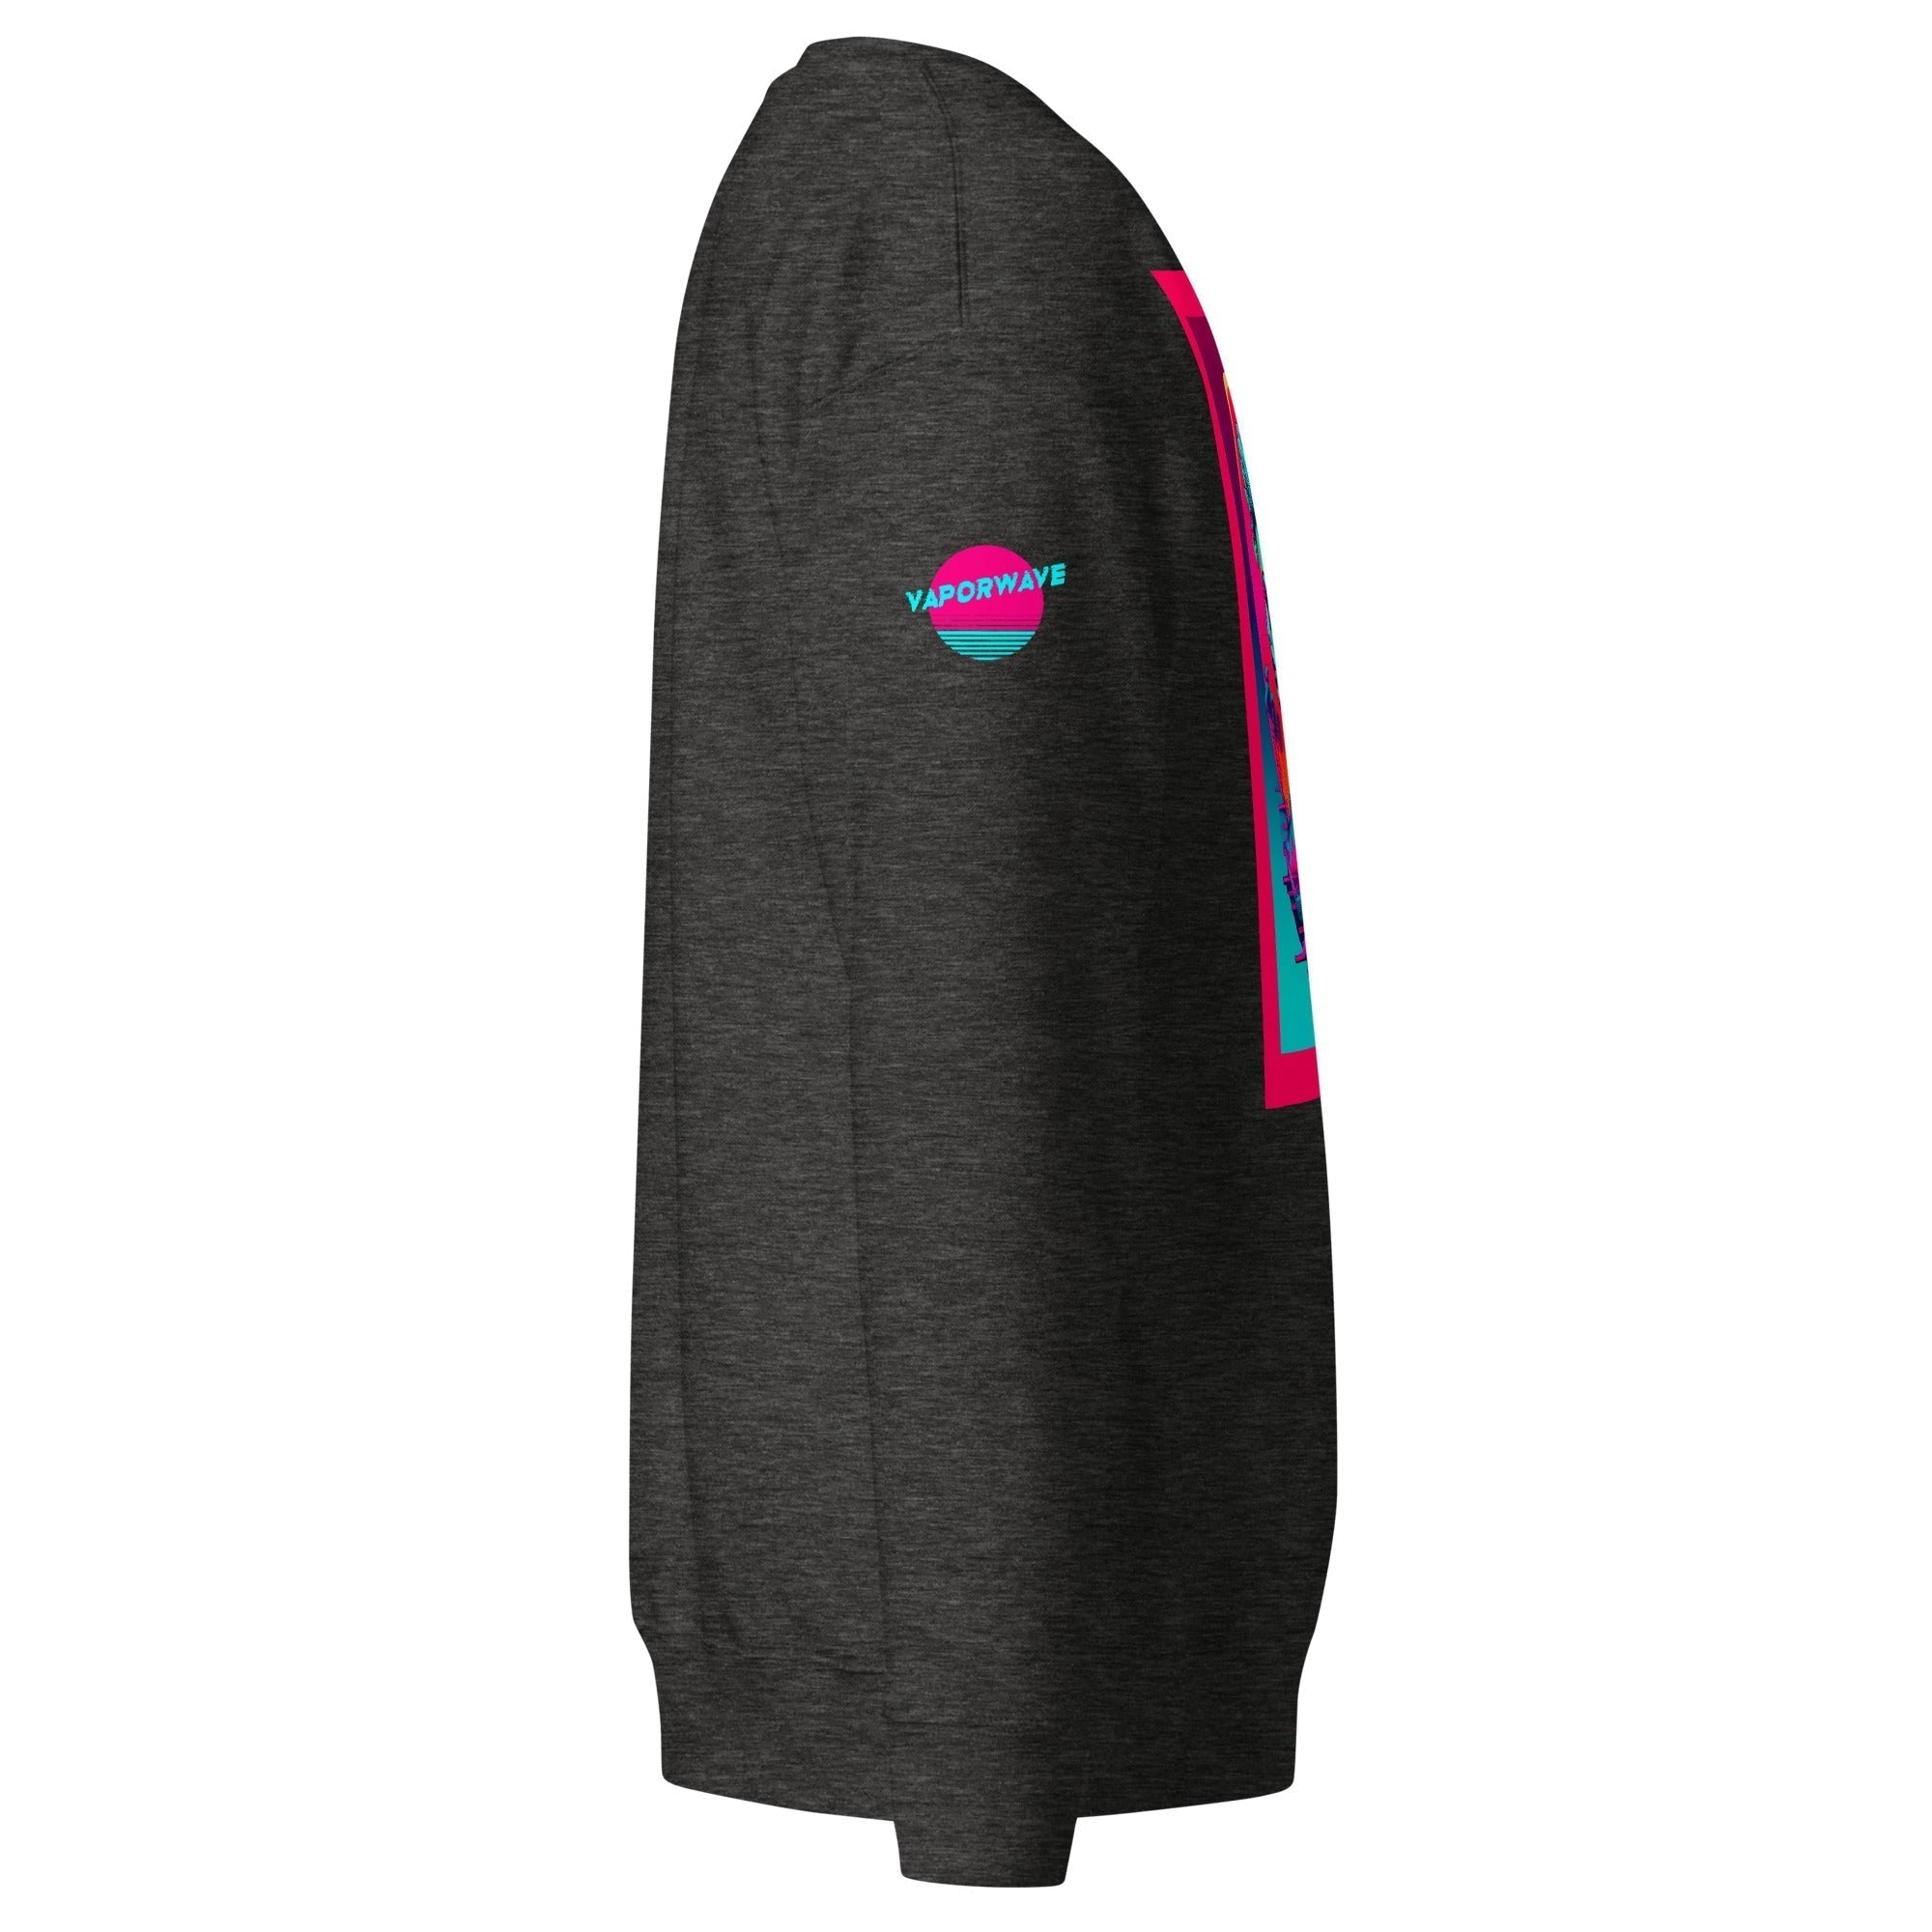 Unisex Premium Sweatshirt - Vaporwave Series v.25 - GRAPHIC T-SHIRTS